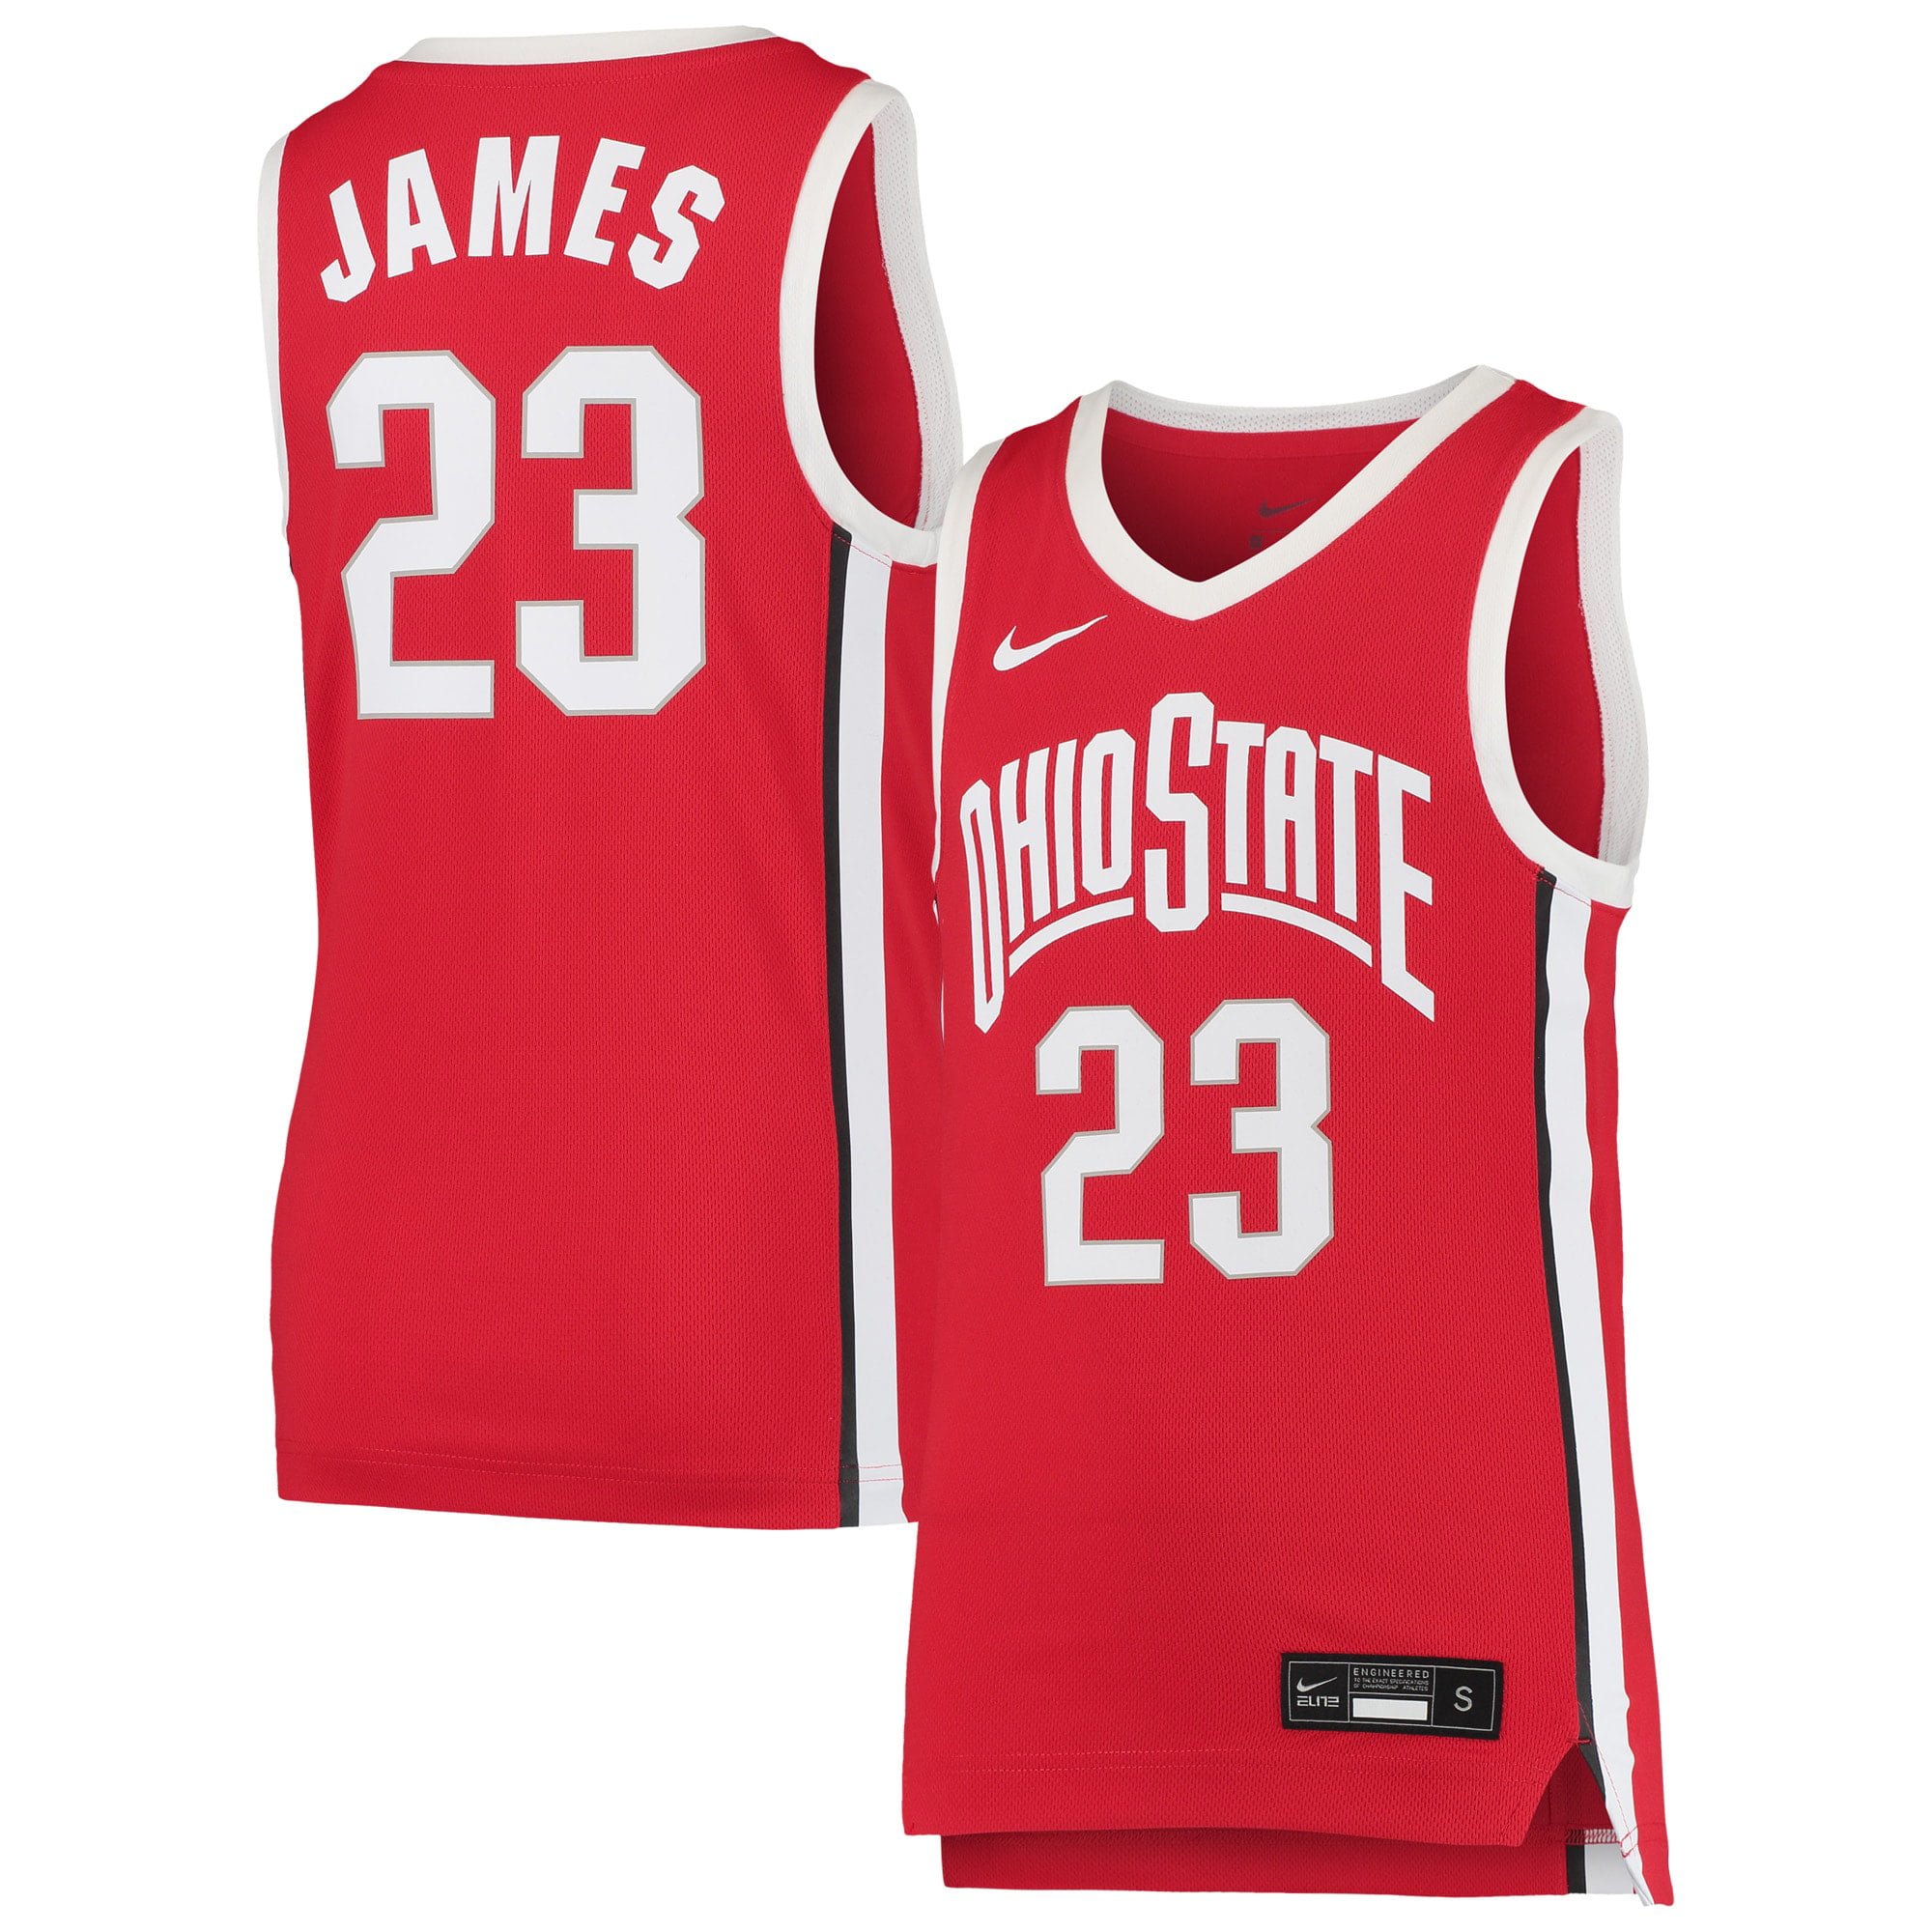 Lebron James Ohio State Buckeyes Nike Youth Replica Basketball Jersey Scarlet Walmart Com Walmart Com